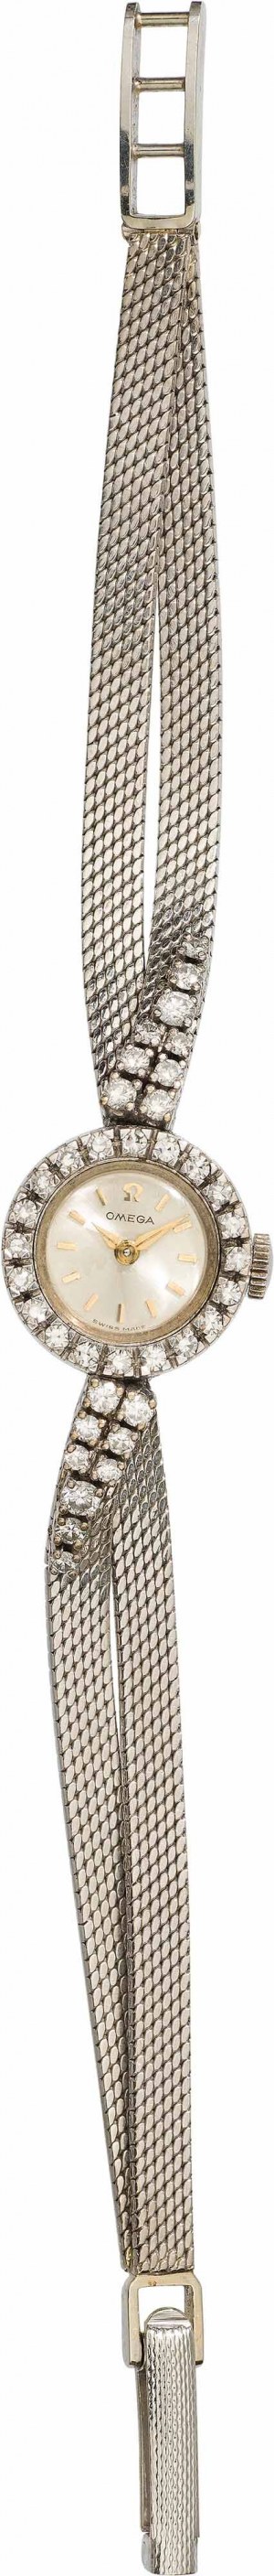 Omega: Ladies watch